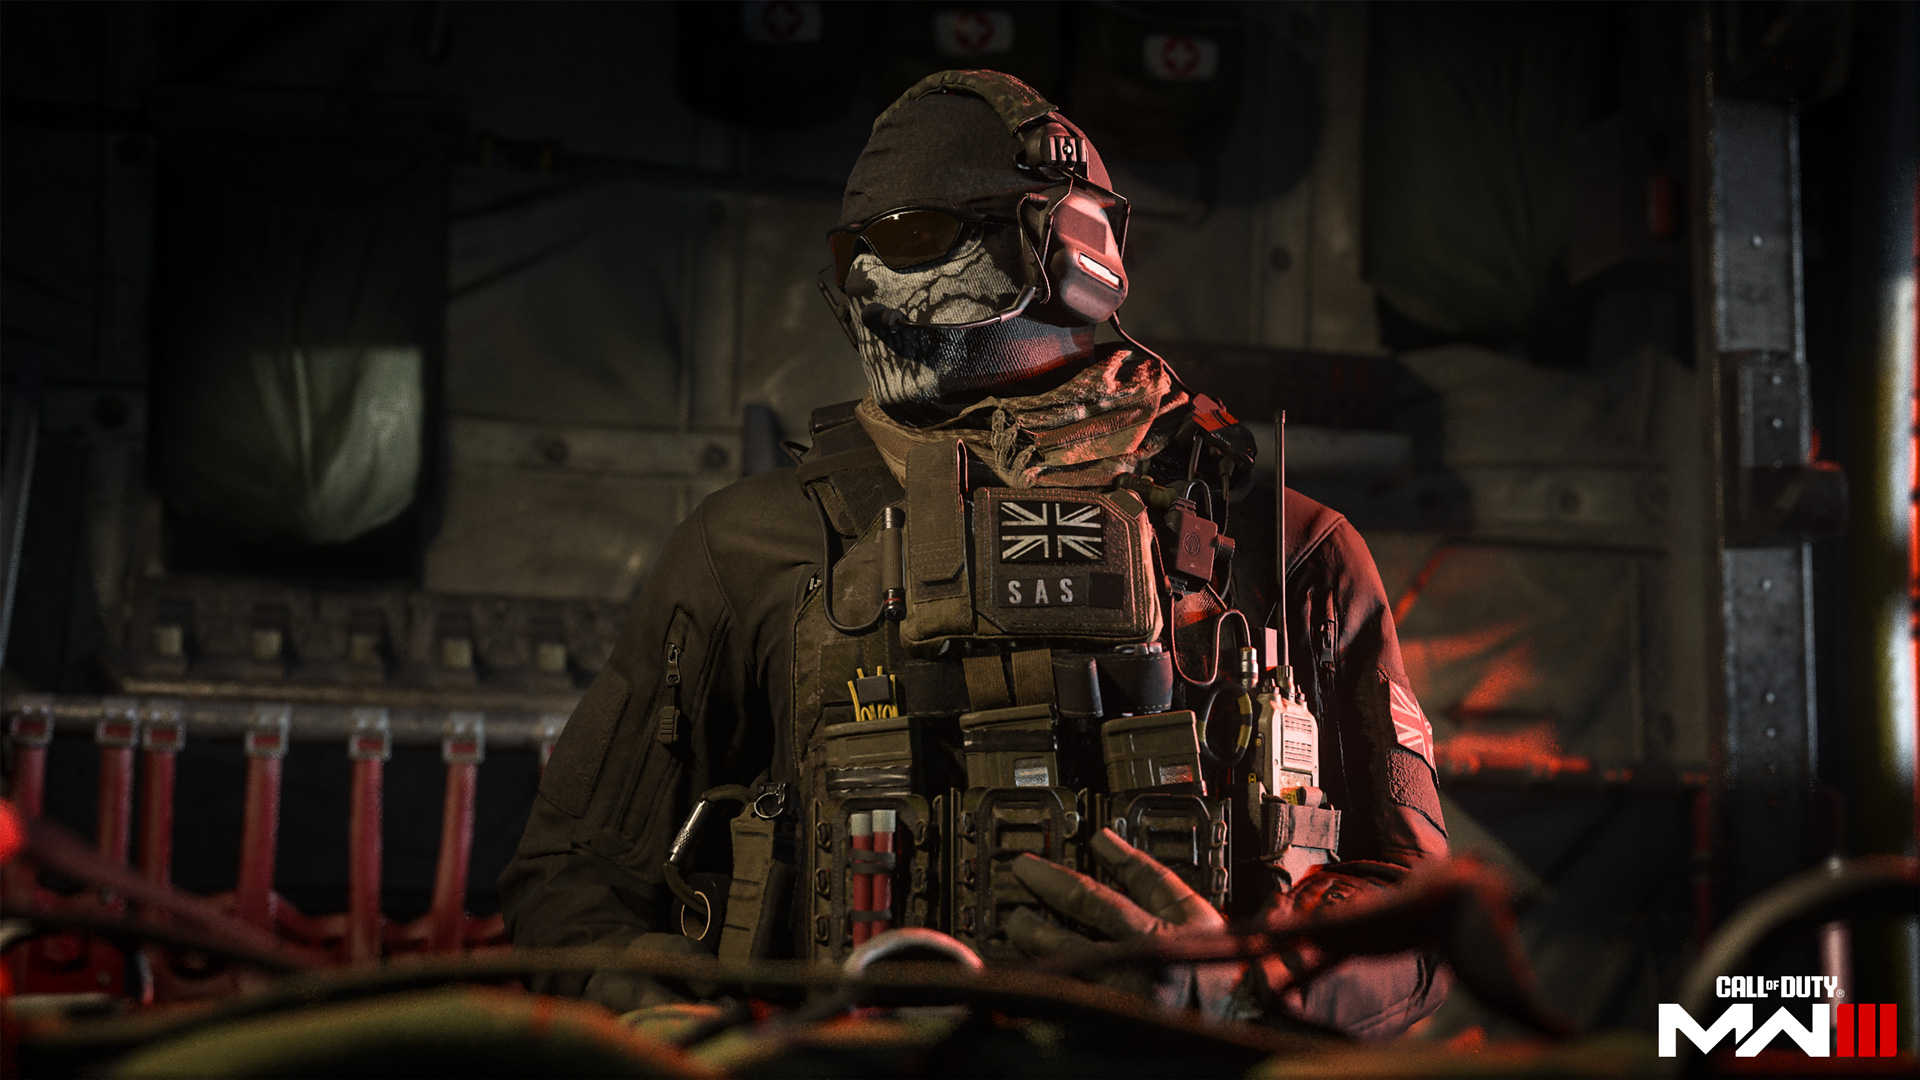 Modern Warfare 2 beta, preorder bonuses, and editions leaked